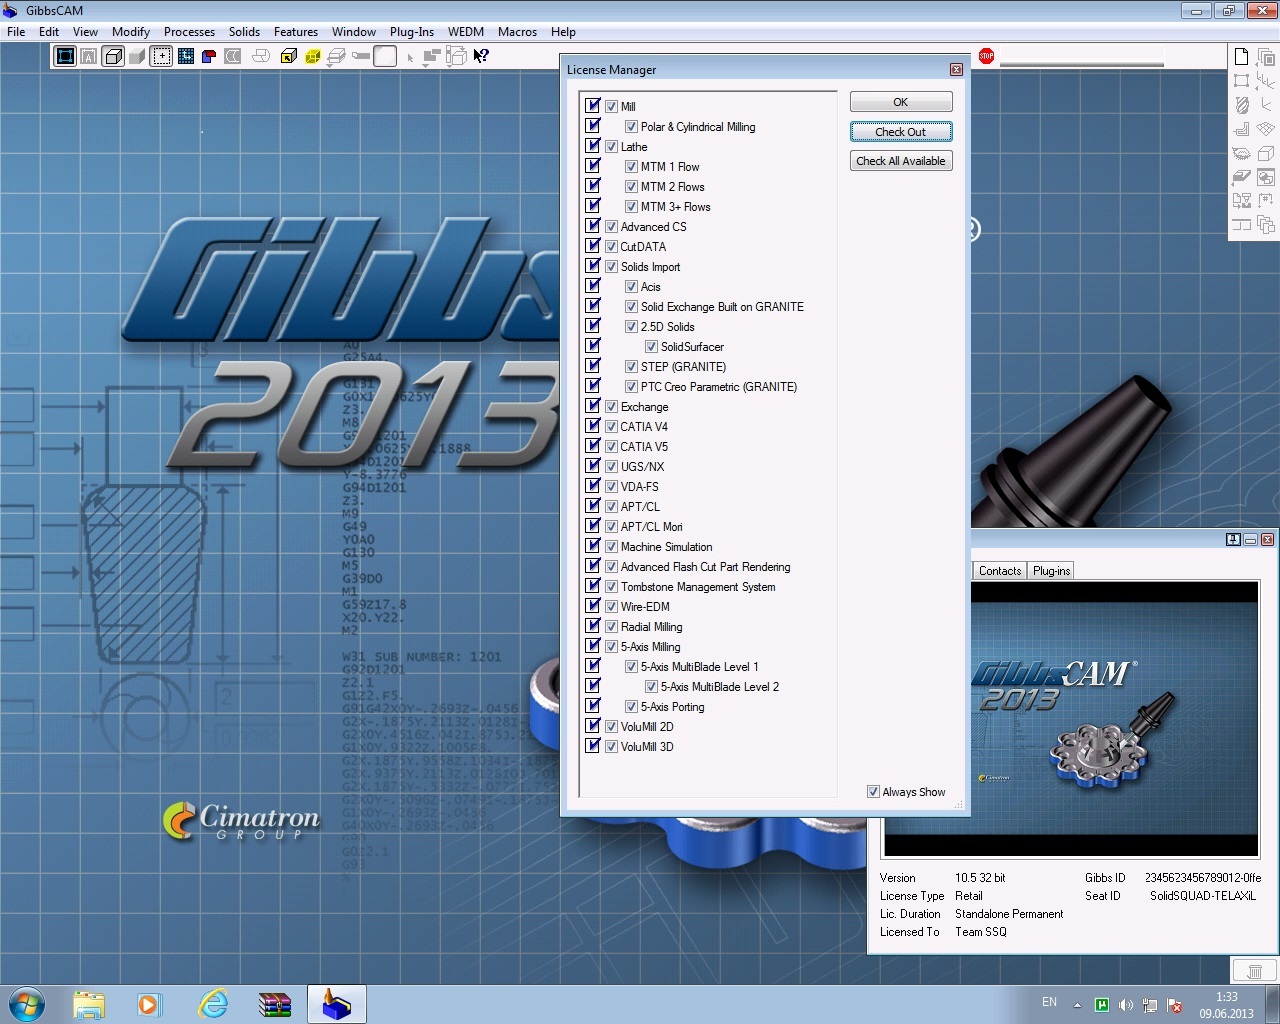 GibbsCAM 2013 (build 10.5.0.0)